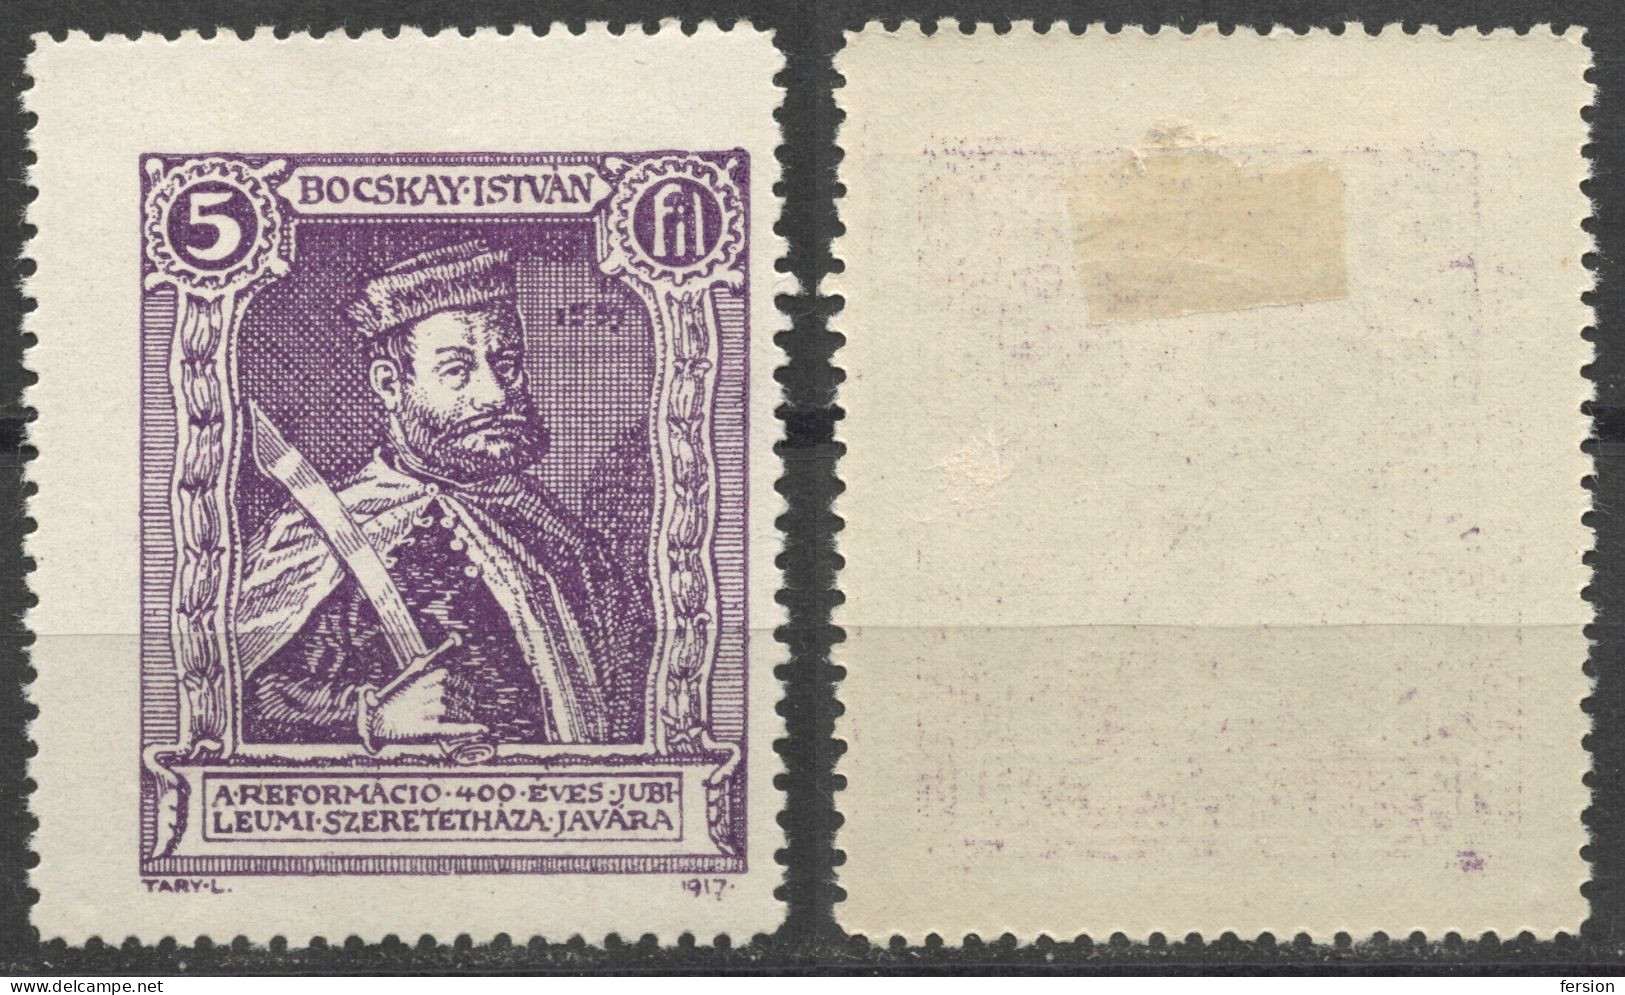 Bocskay Istvan Prince Transylvania ROMANIA Reformed Church Protestant Reformation Label Vignette Cinderella 1917 HUNGARY - Transylvania